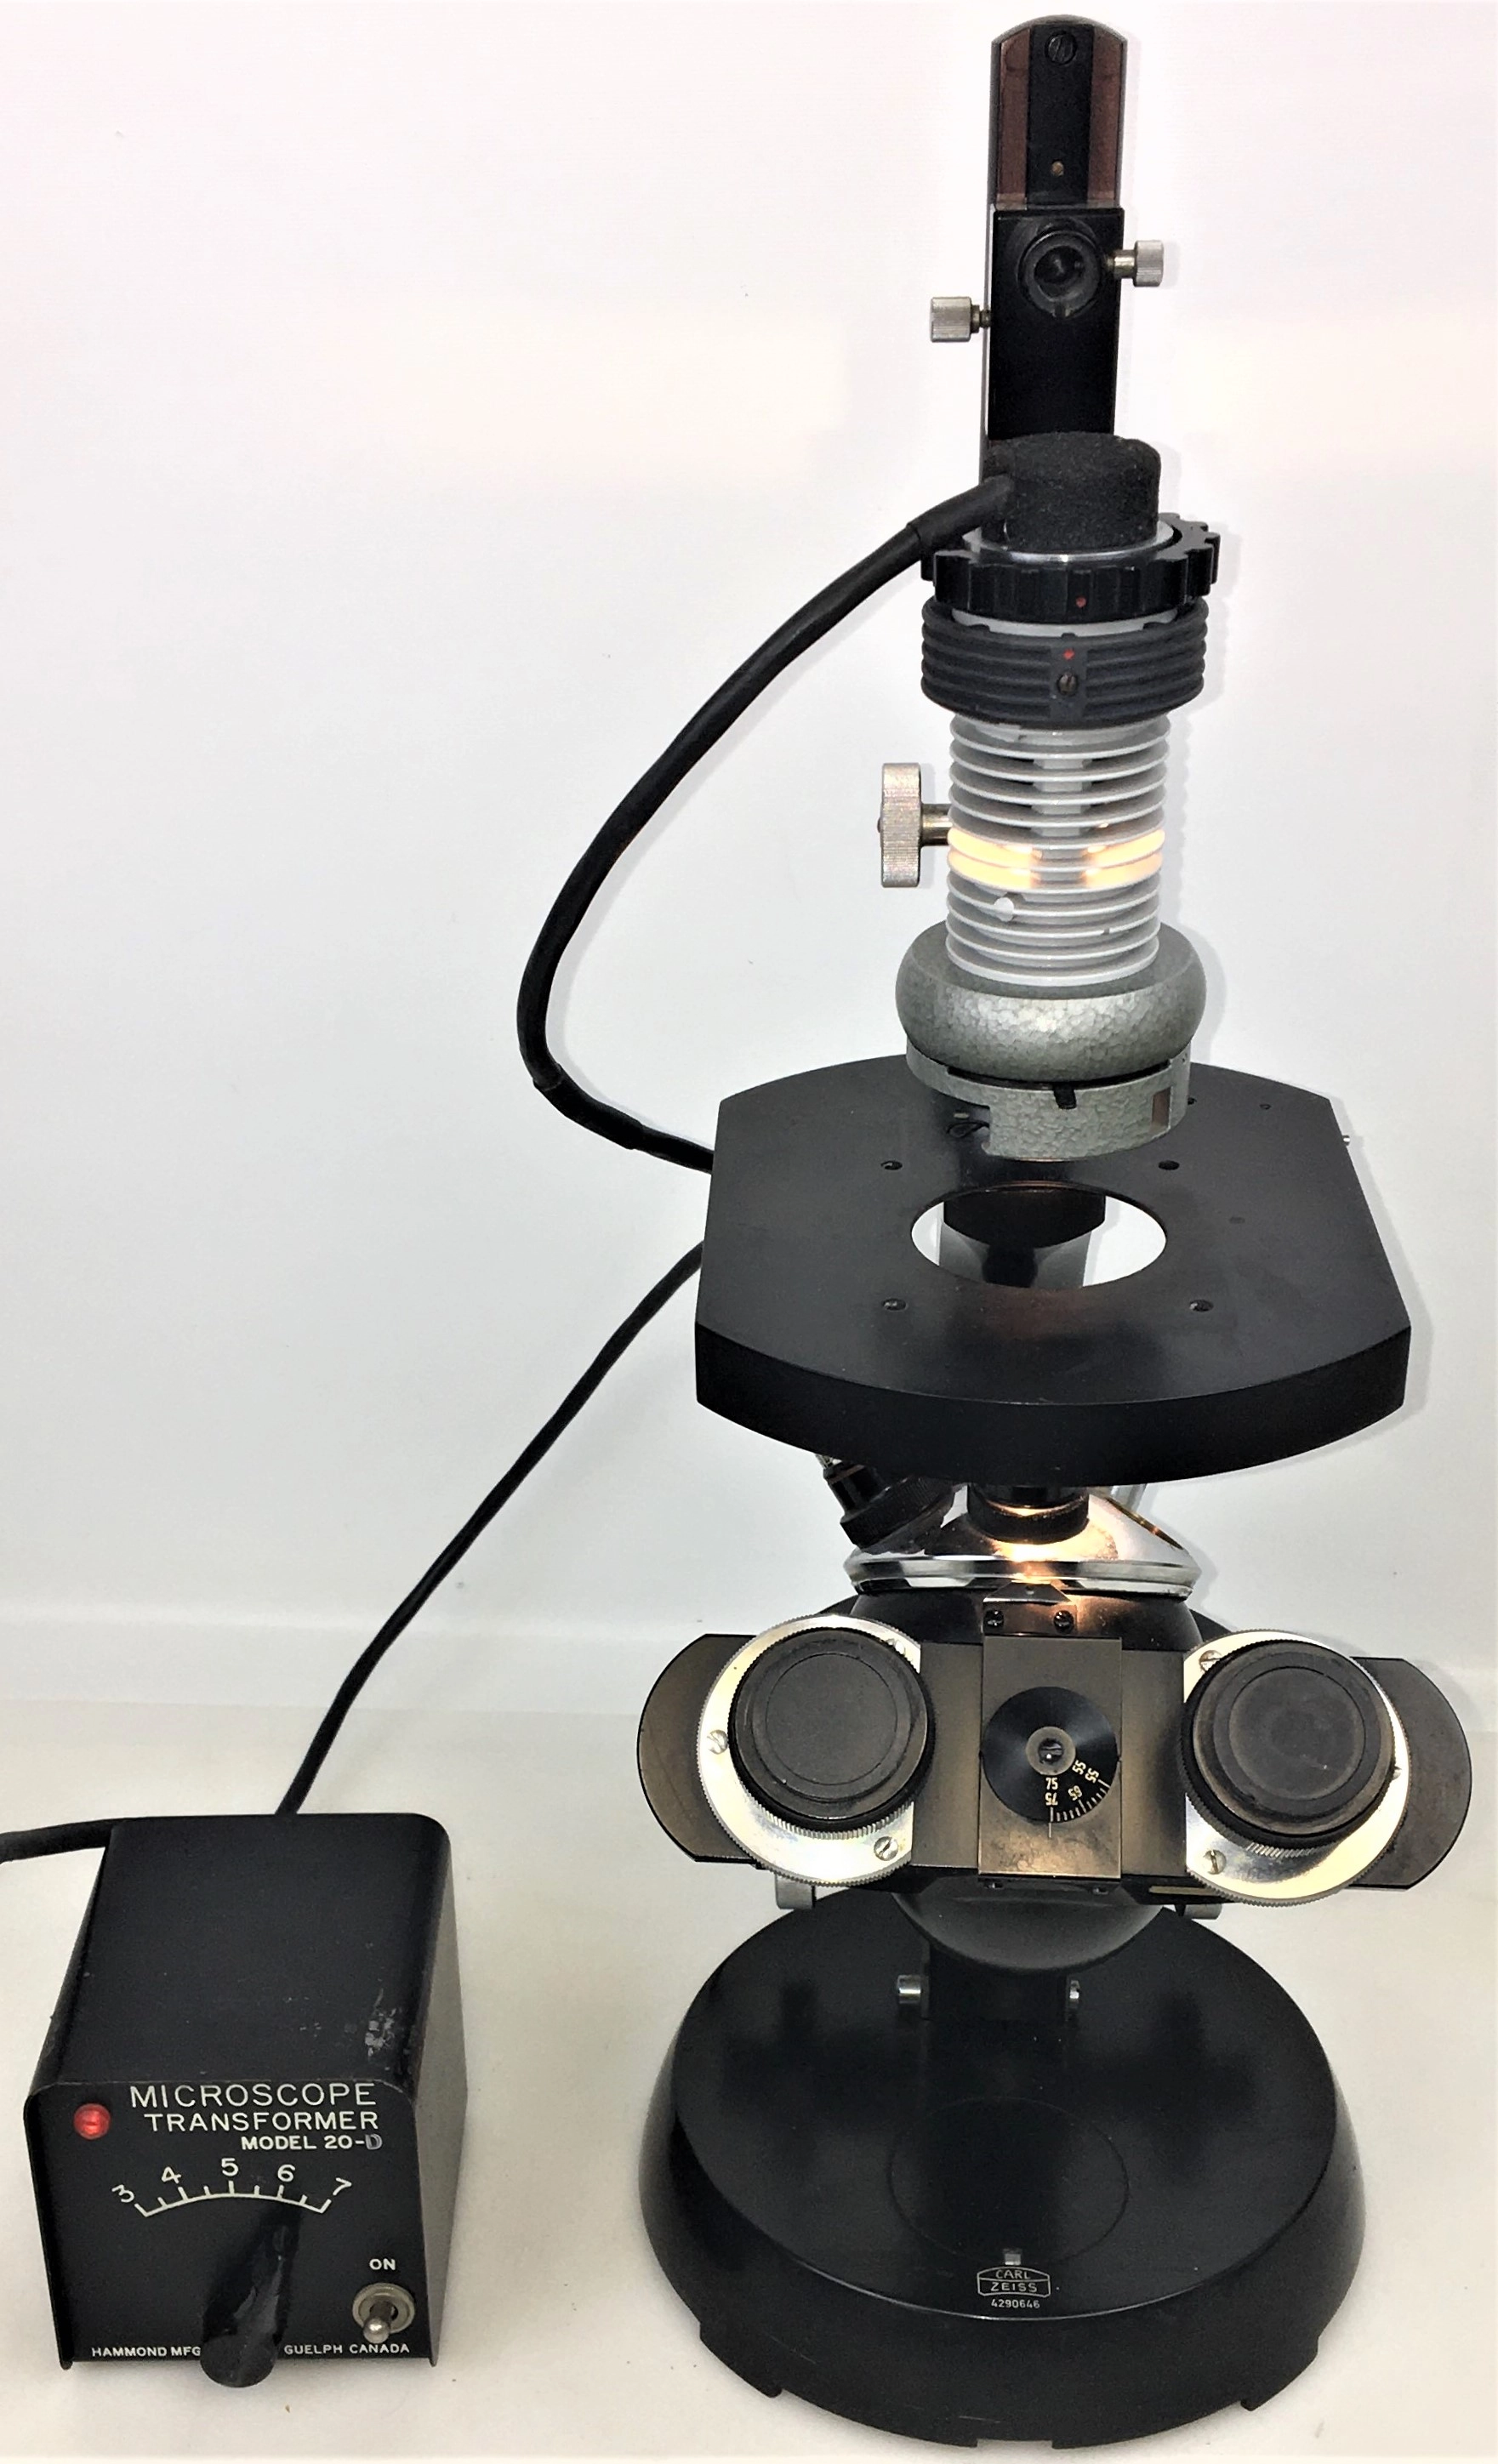 Carl Zeiss Inverted Microscope with Illuminator